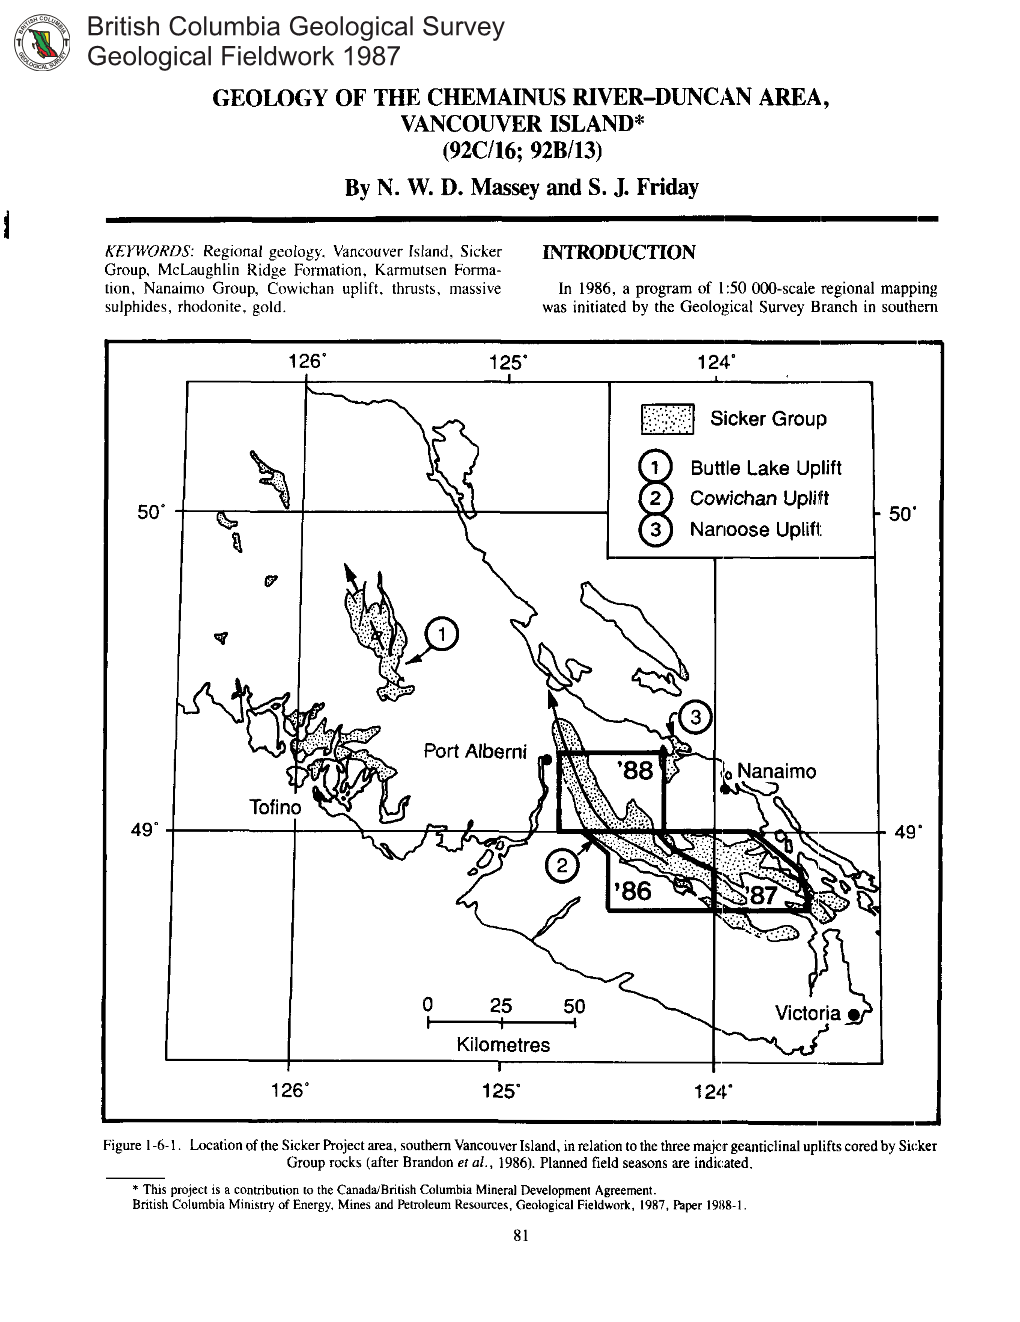 British Columbia Geological Survey Geological Fieldwork 1987